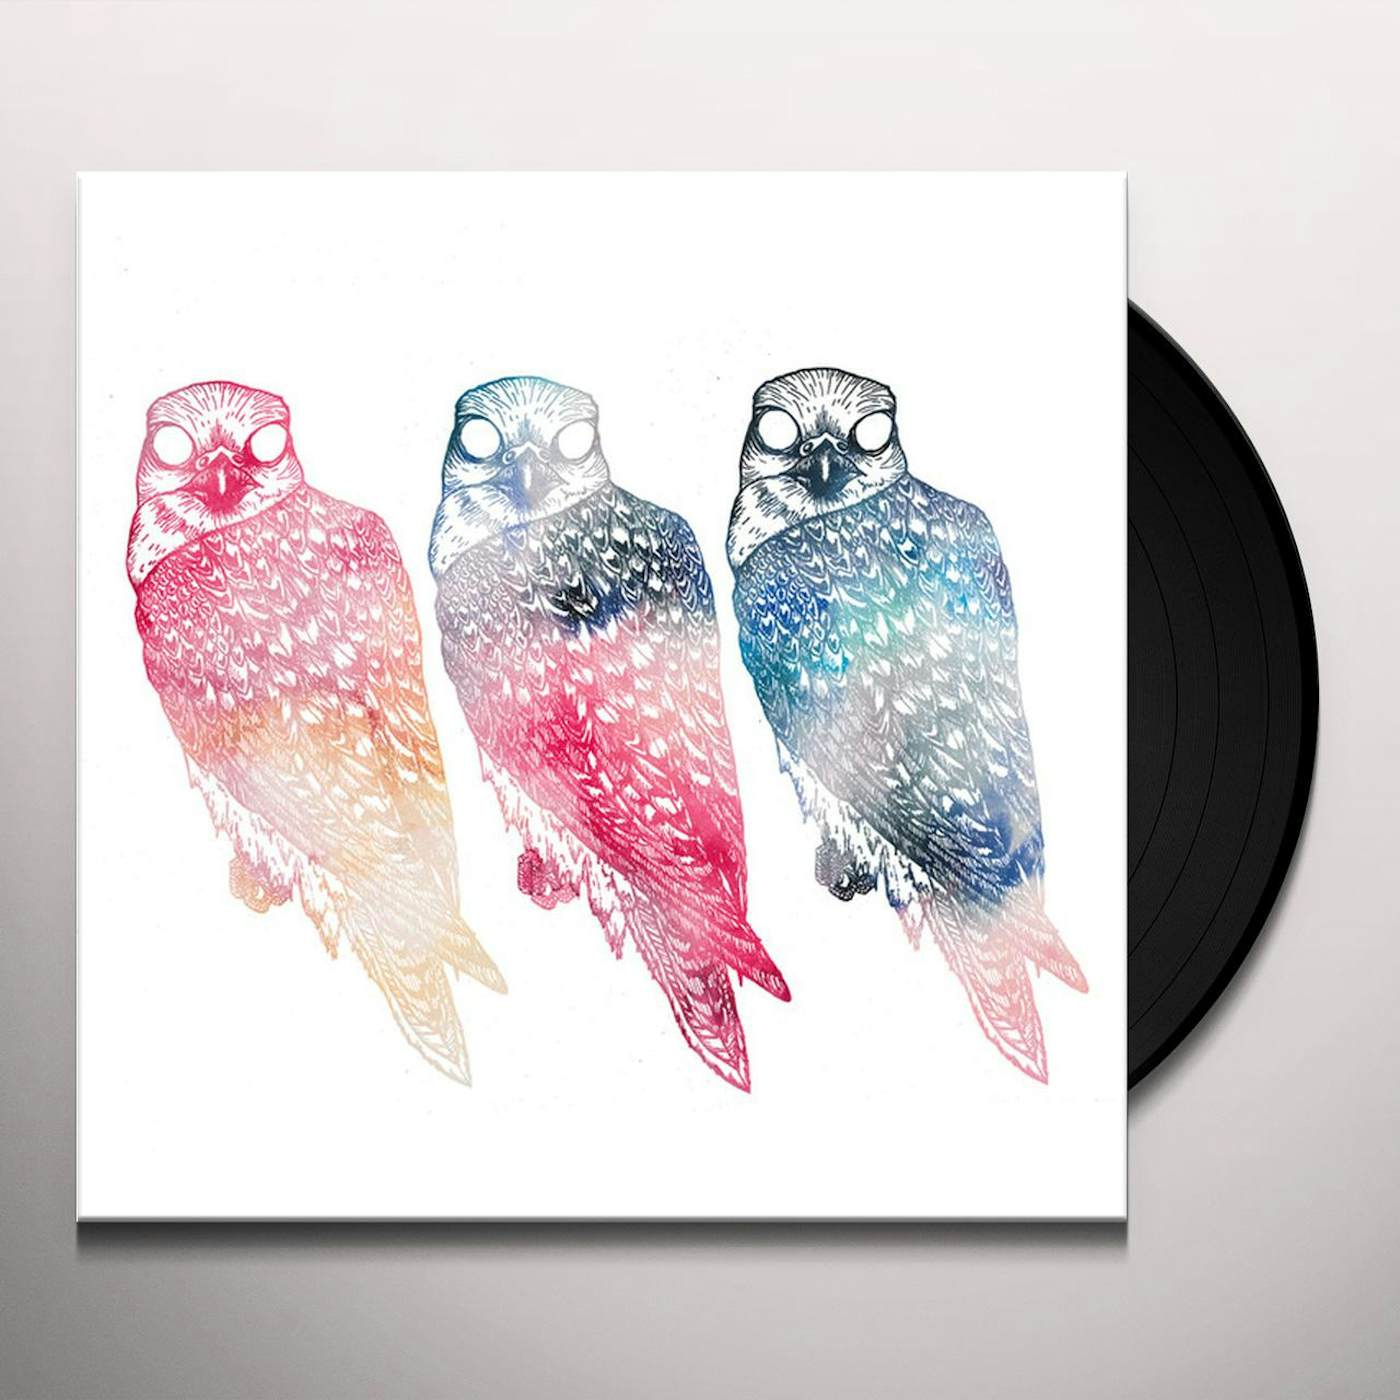 Flyying Colours Mindfullness Vinyl Record